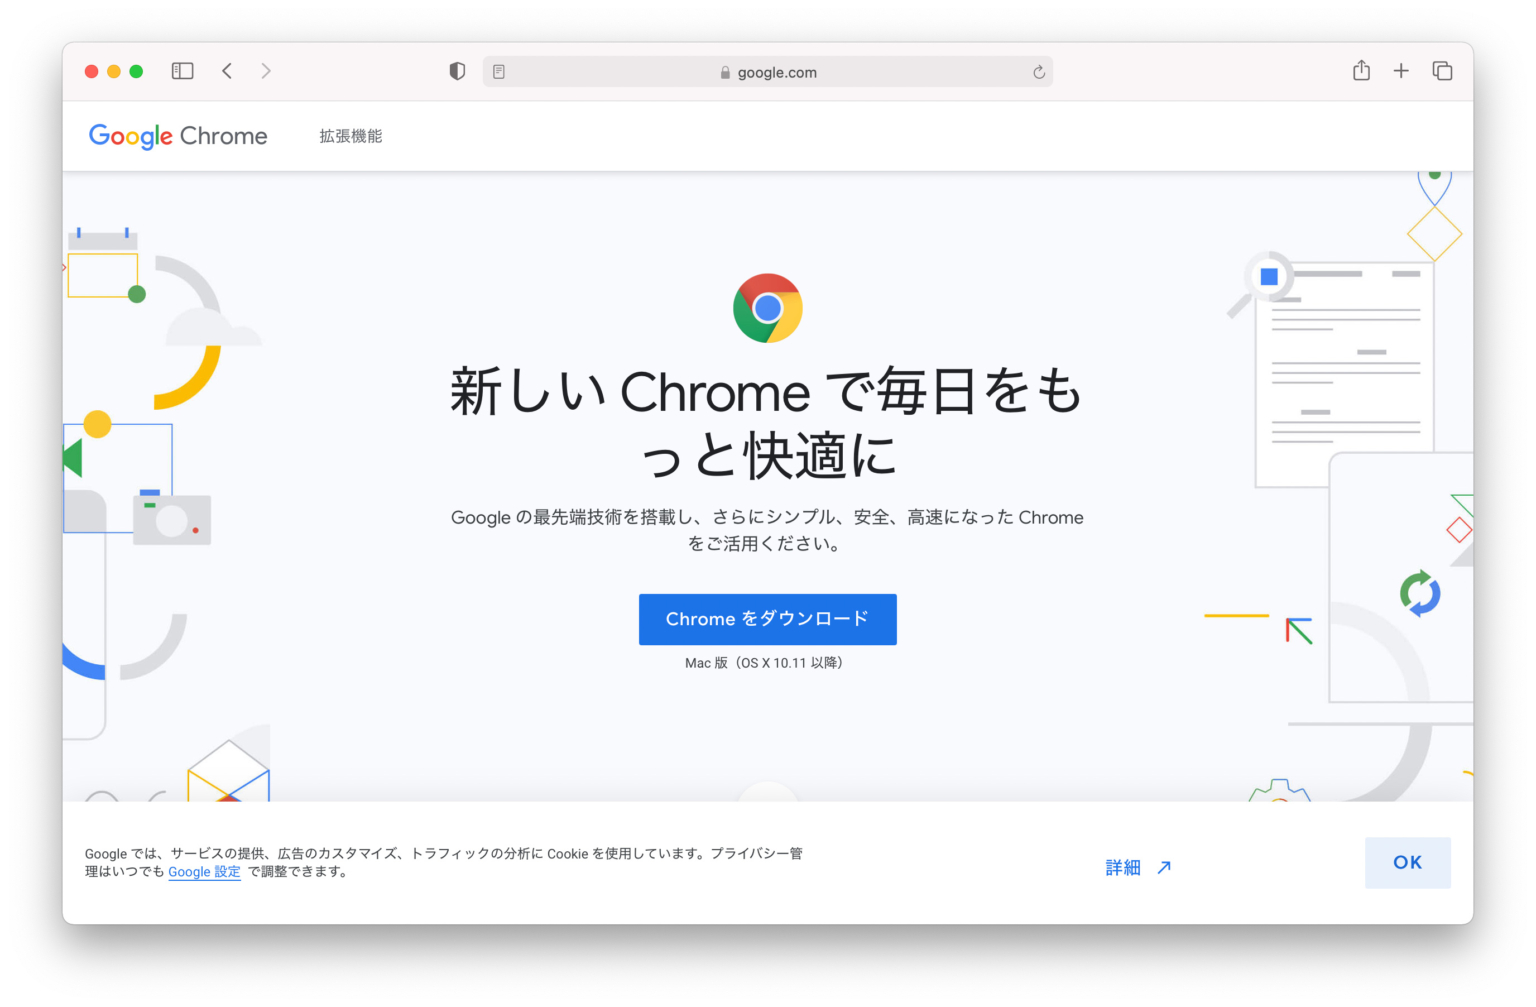 google chrome for macbook air m1